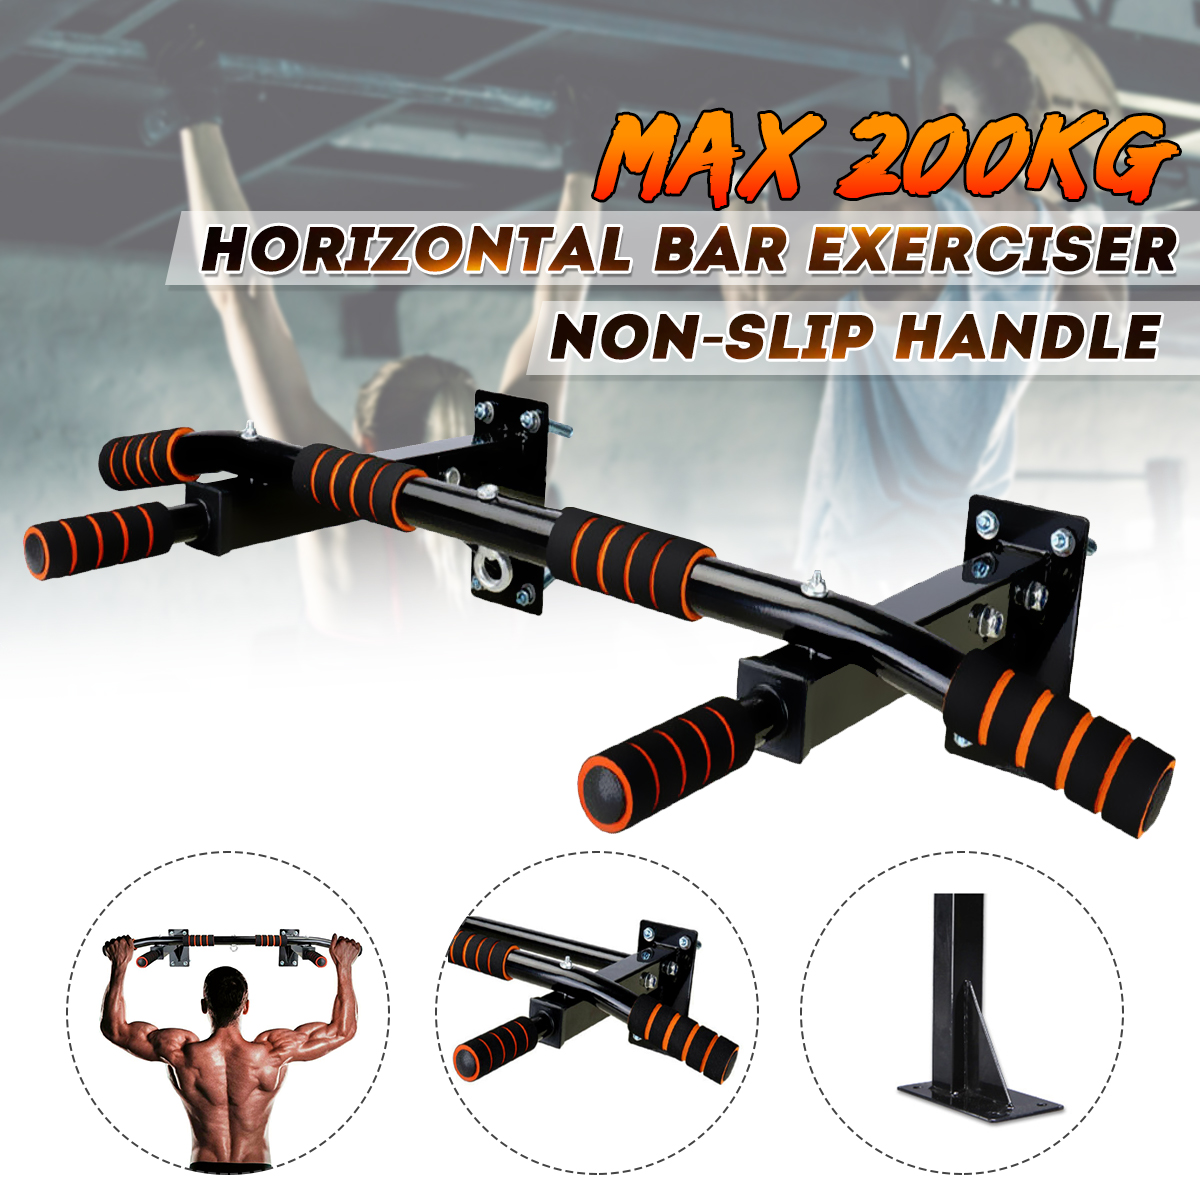 Indoor-Black-Metal-Horizontal-Bar-On-Wall-Pull-ups-Home-Wall-Fitness-Exerciser-Set-1713639